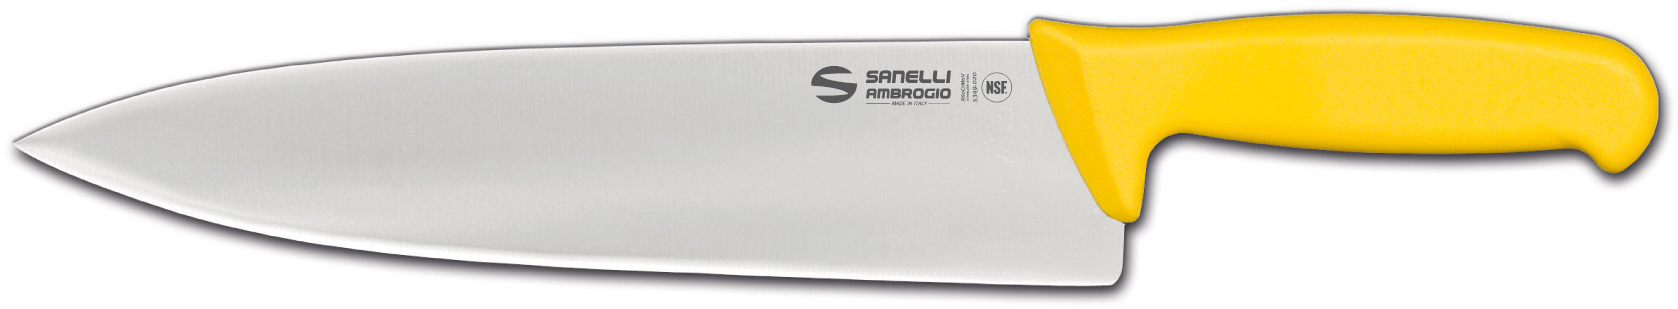 S349.026Y SUPRA CHEFS KNIFE YELLOW HANDLE 26CM LAMA SANELLI AMBROGIO